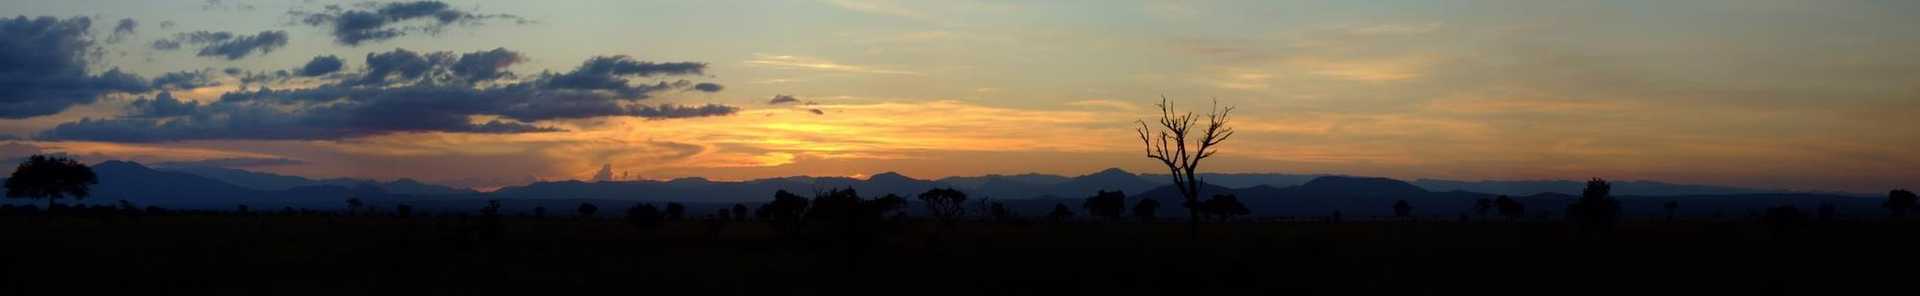 Sunset in Mikumi National Park